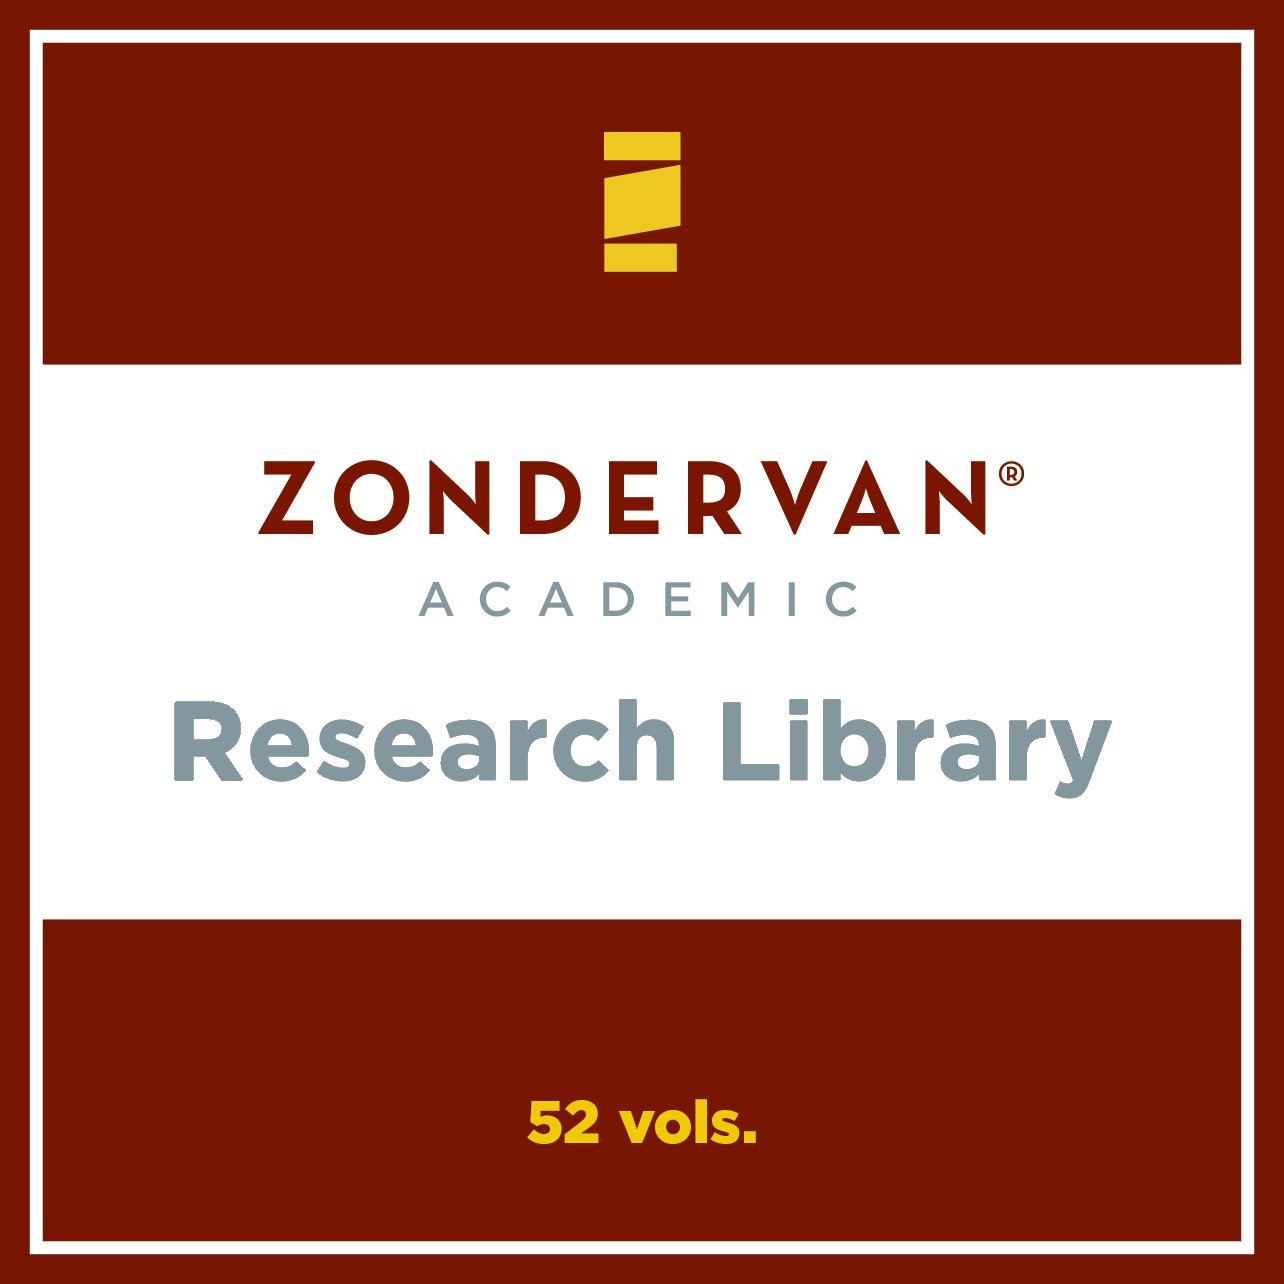 Zondervan Academic Research Library (52 vols.)